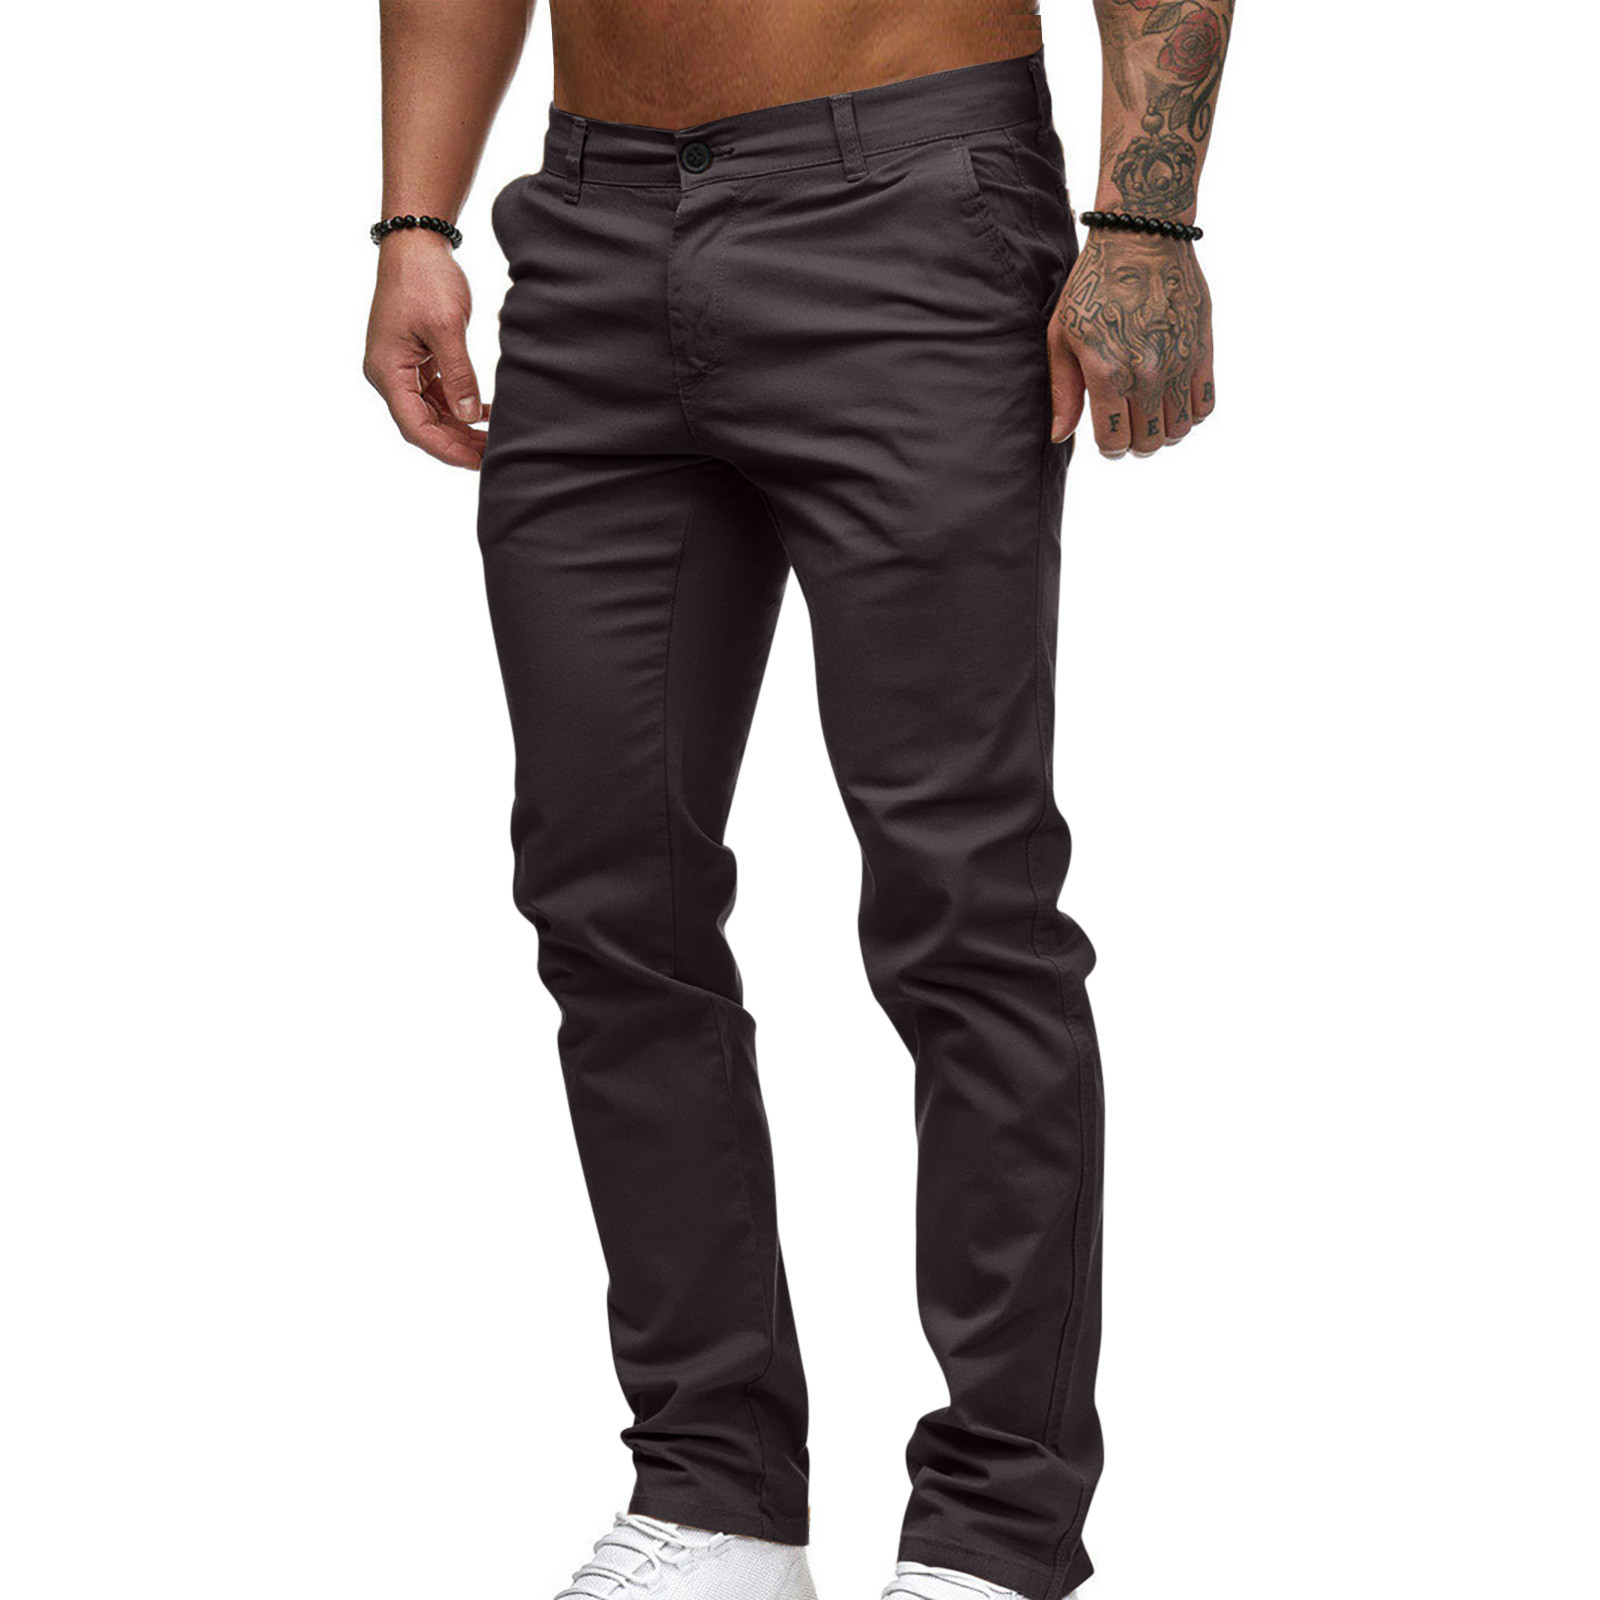 DeHolifer Mens Casual Chinos Pants Cotton Slacks Elastic Waistband Classic Fit Flat Front Khaki Pant Dark Gray 3XL - image 2 of 5